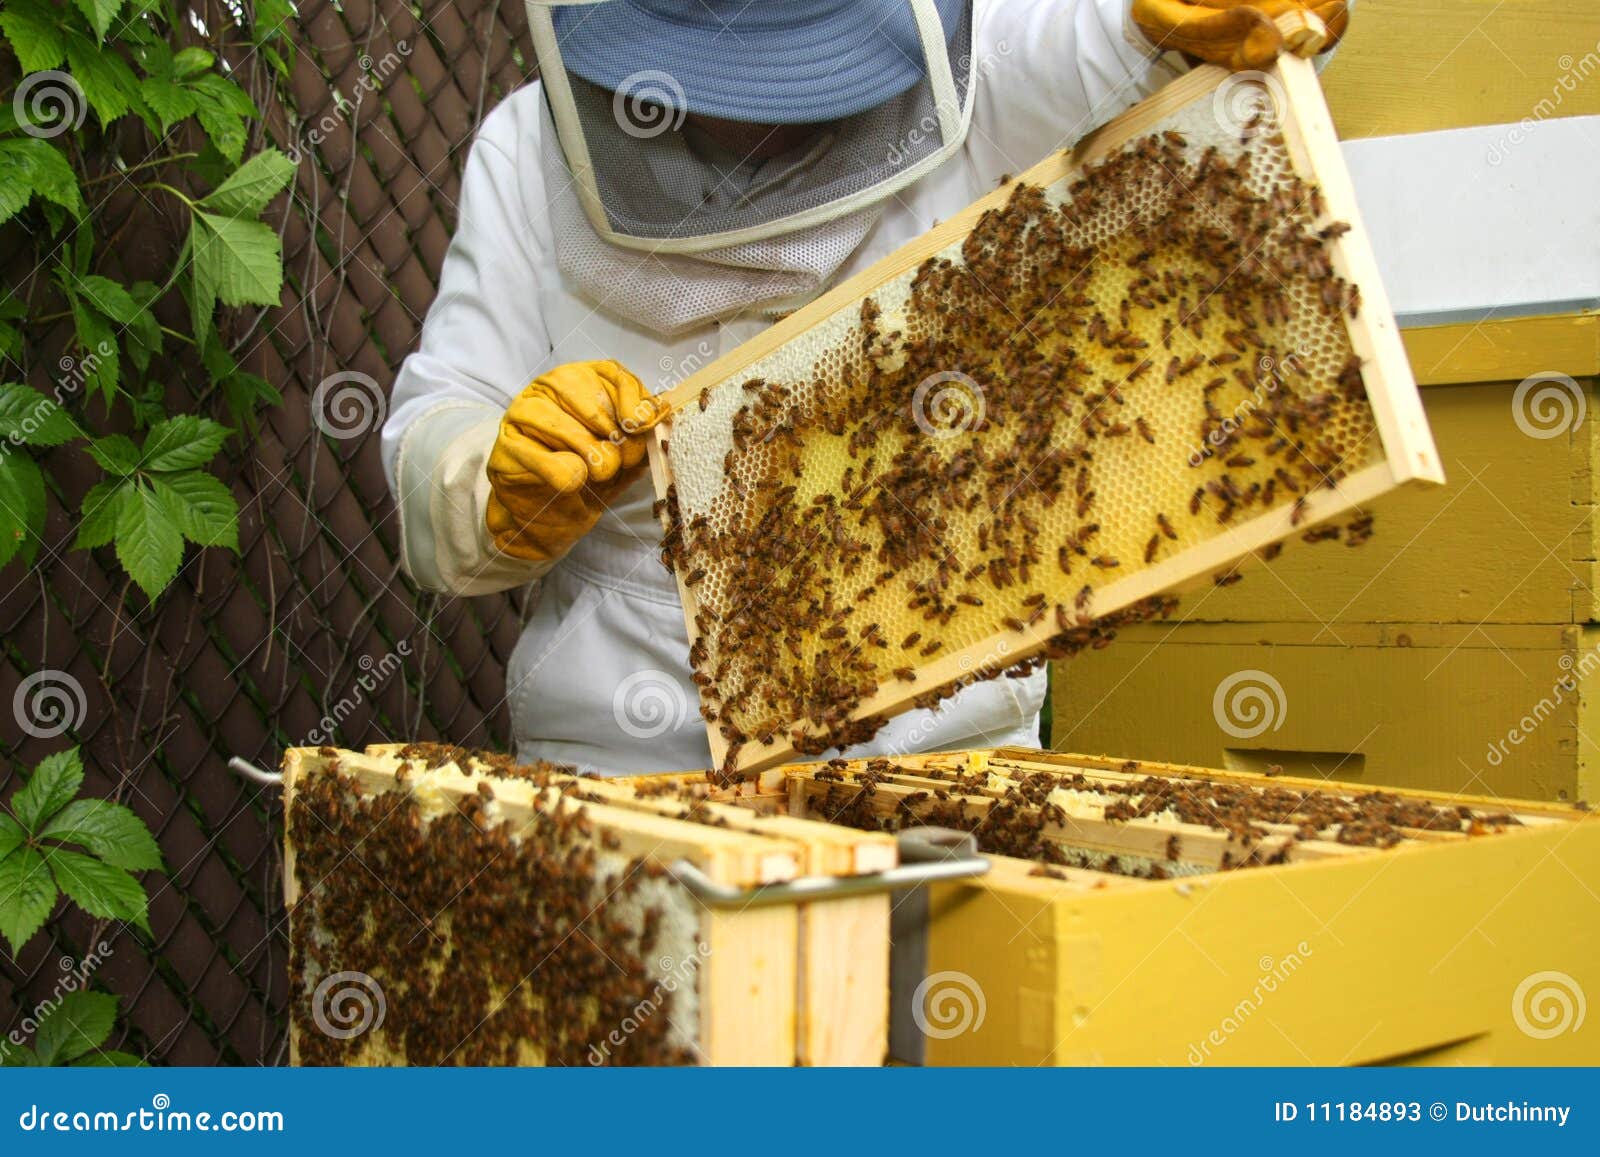 beekeeper inspecting hive